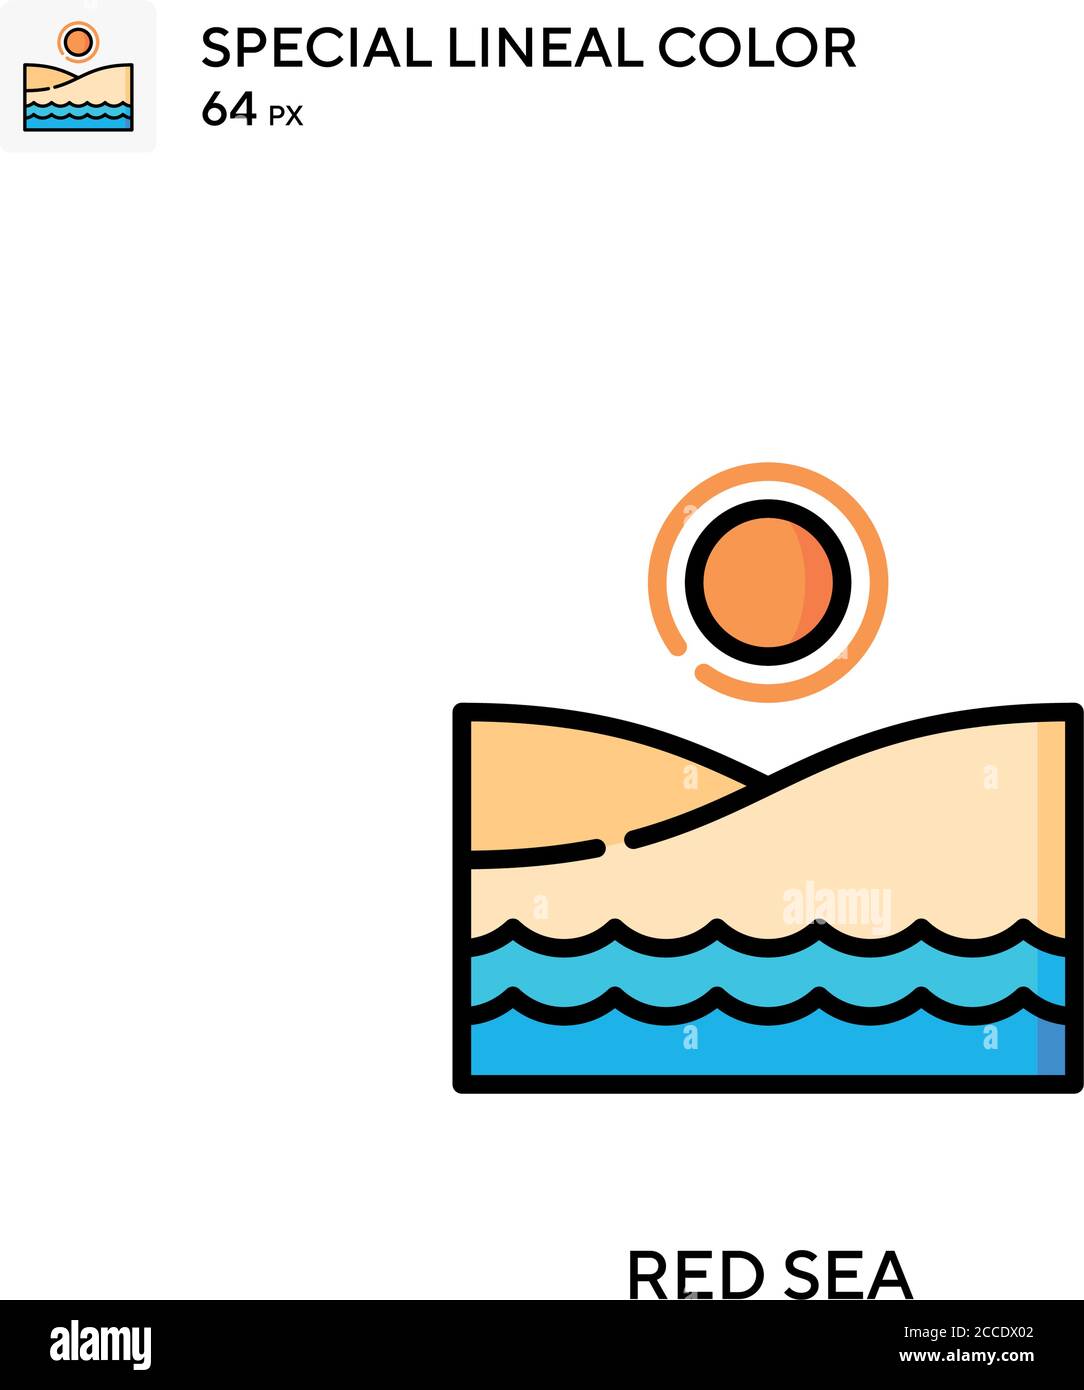 Rotes Meer spezielles lineales Farbsymbol. Illustration Symbol Design Vorlage für Web mobile UI-Element. Perfekte Farbe modernes Piktogramm auf editierbare Kontur. Stock Vektor